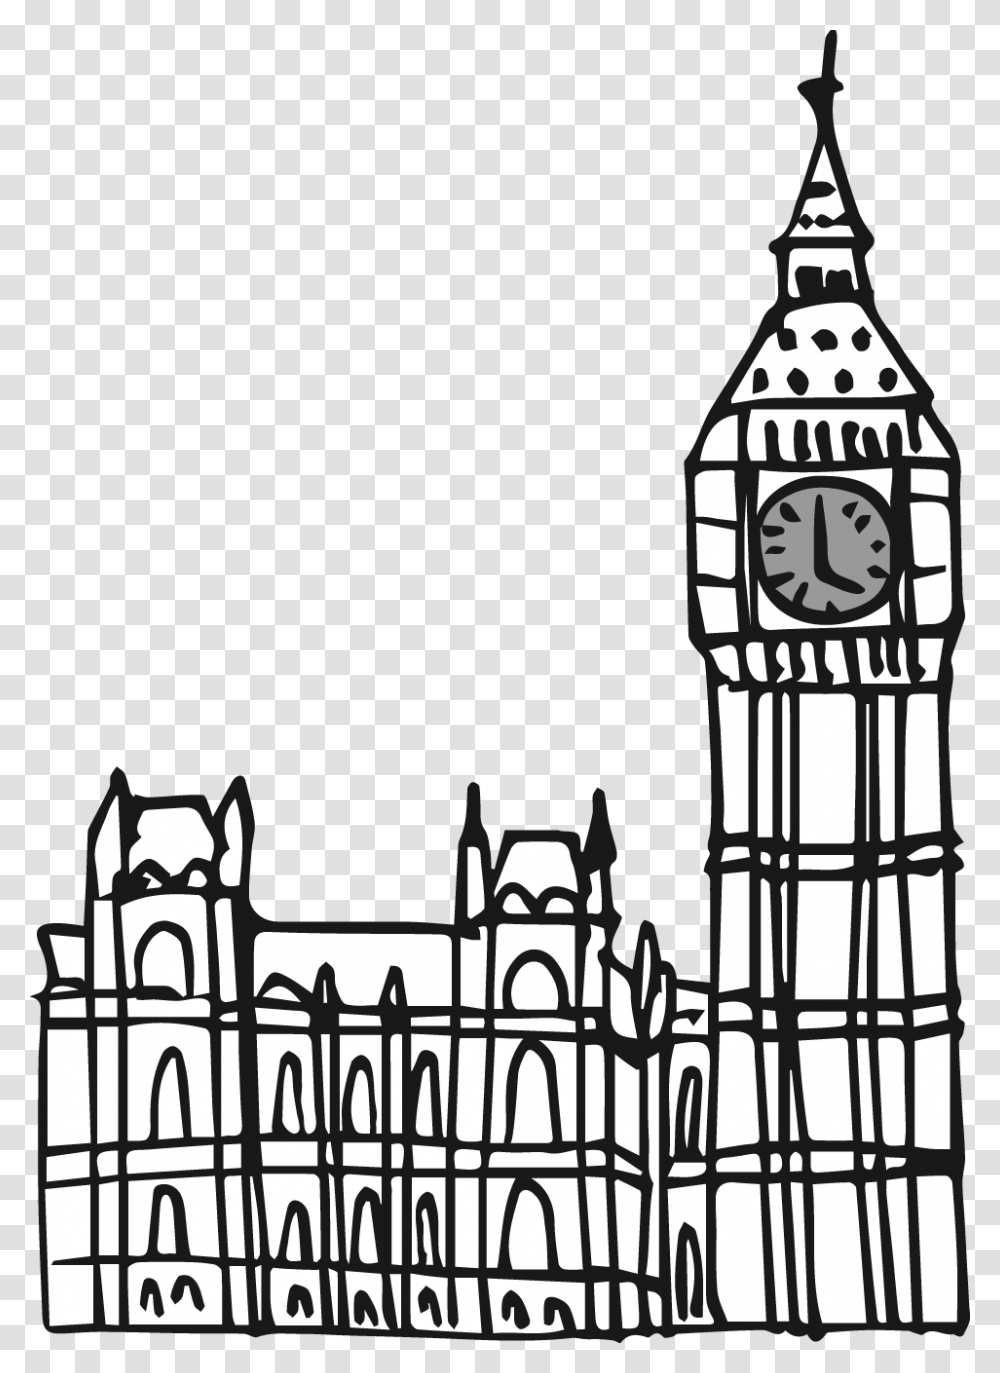 Drawn Big Ben England Big Ben England Drawing, Tower, Architecture, Building, Clock Tower Transparent Png